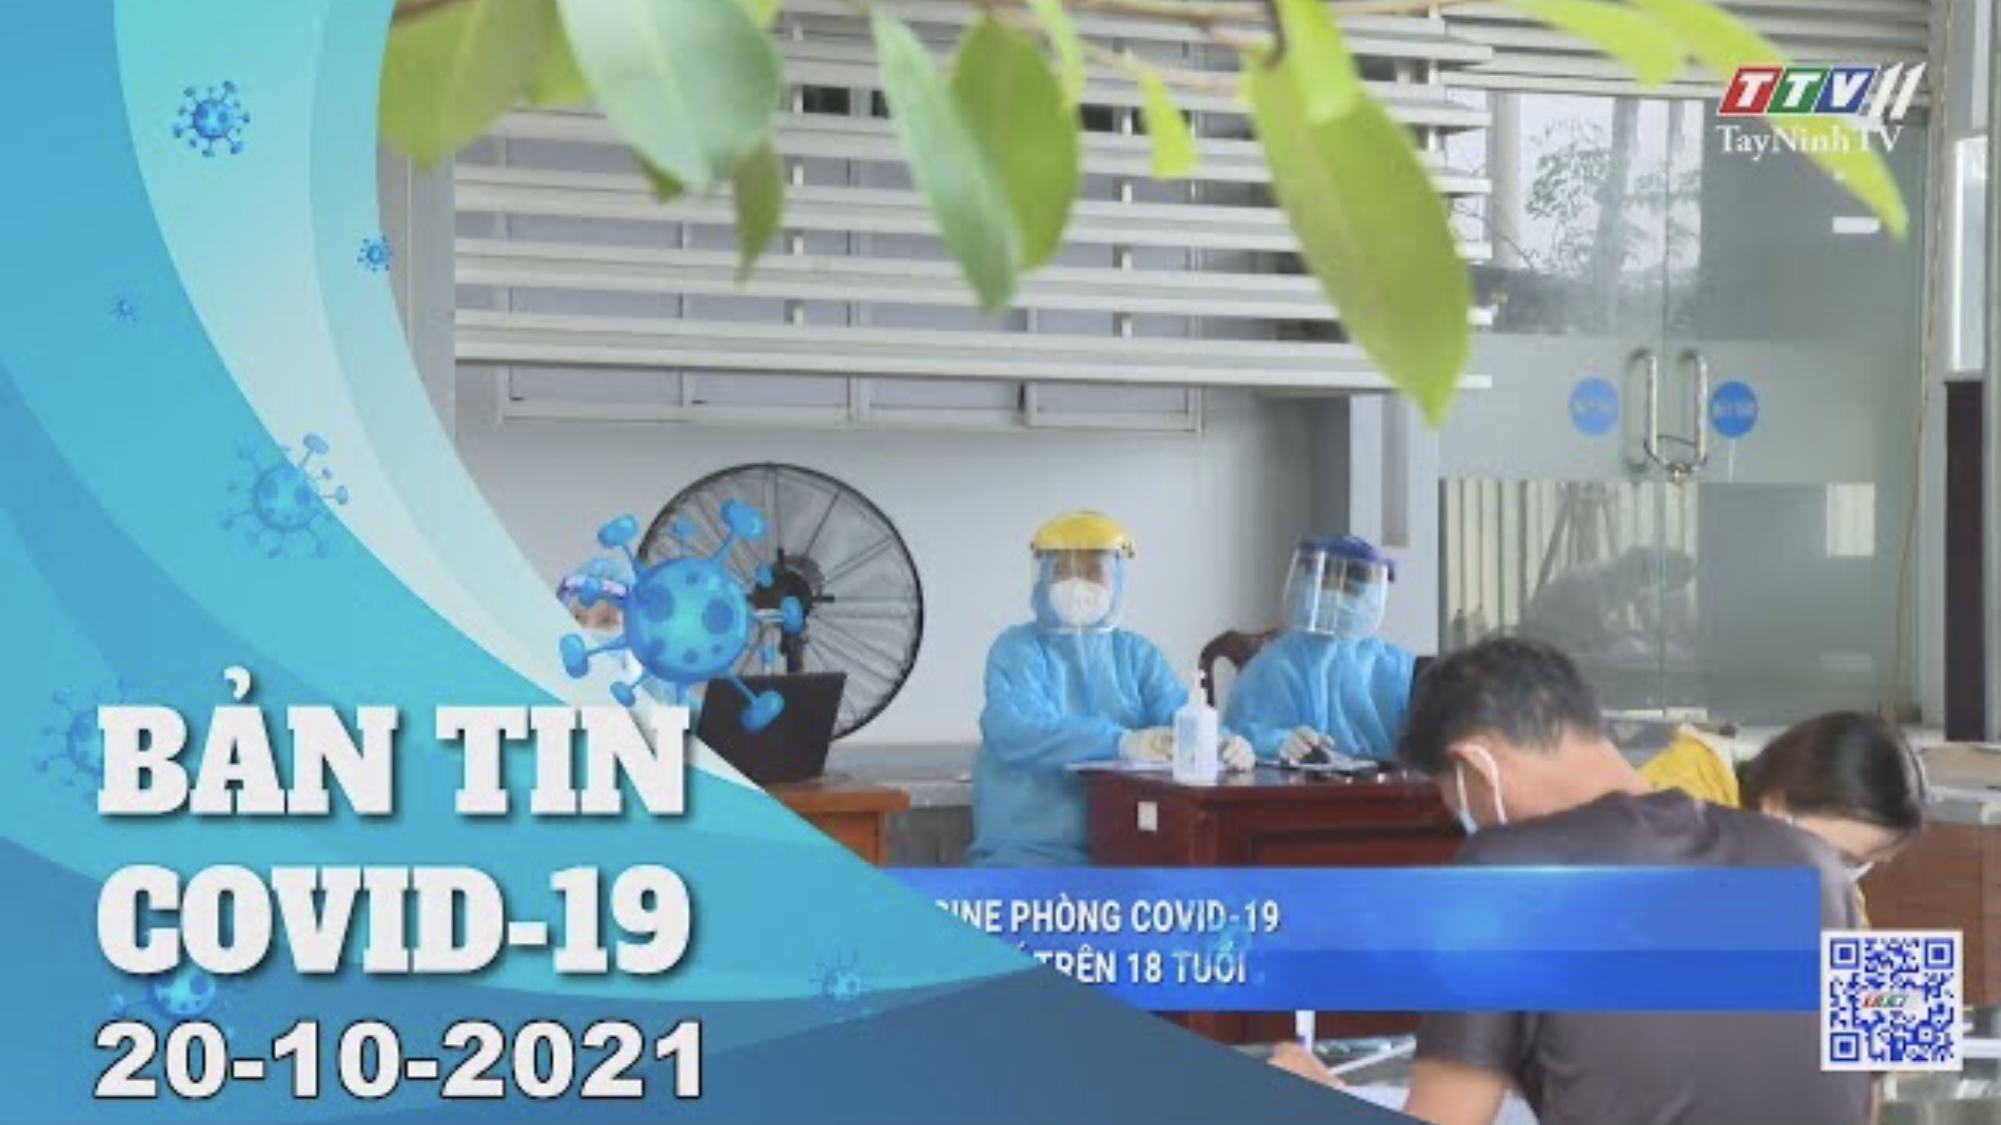 BẢN TIN COVID-19 20/10/2021 | Tin tức hôm nay | TayNinhTV